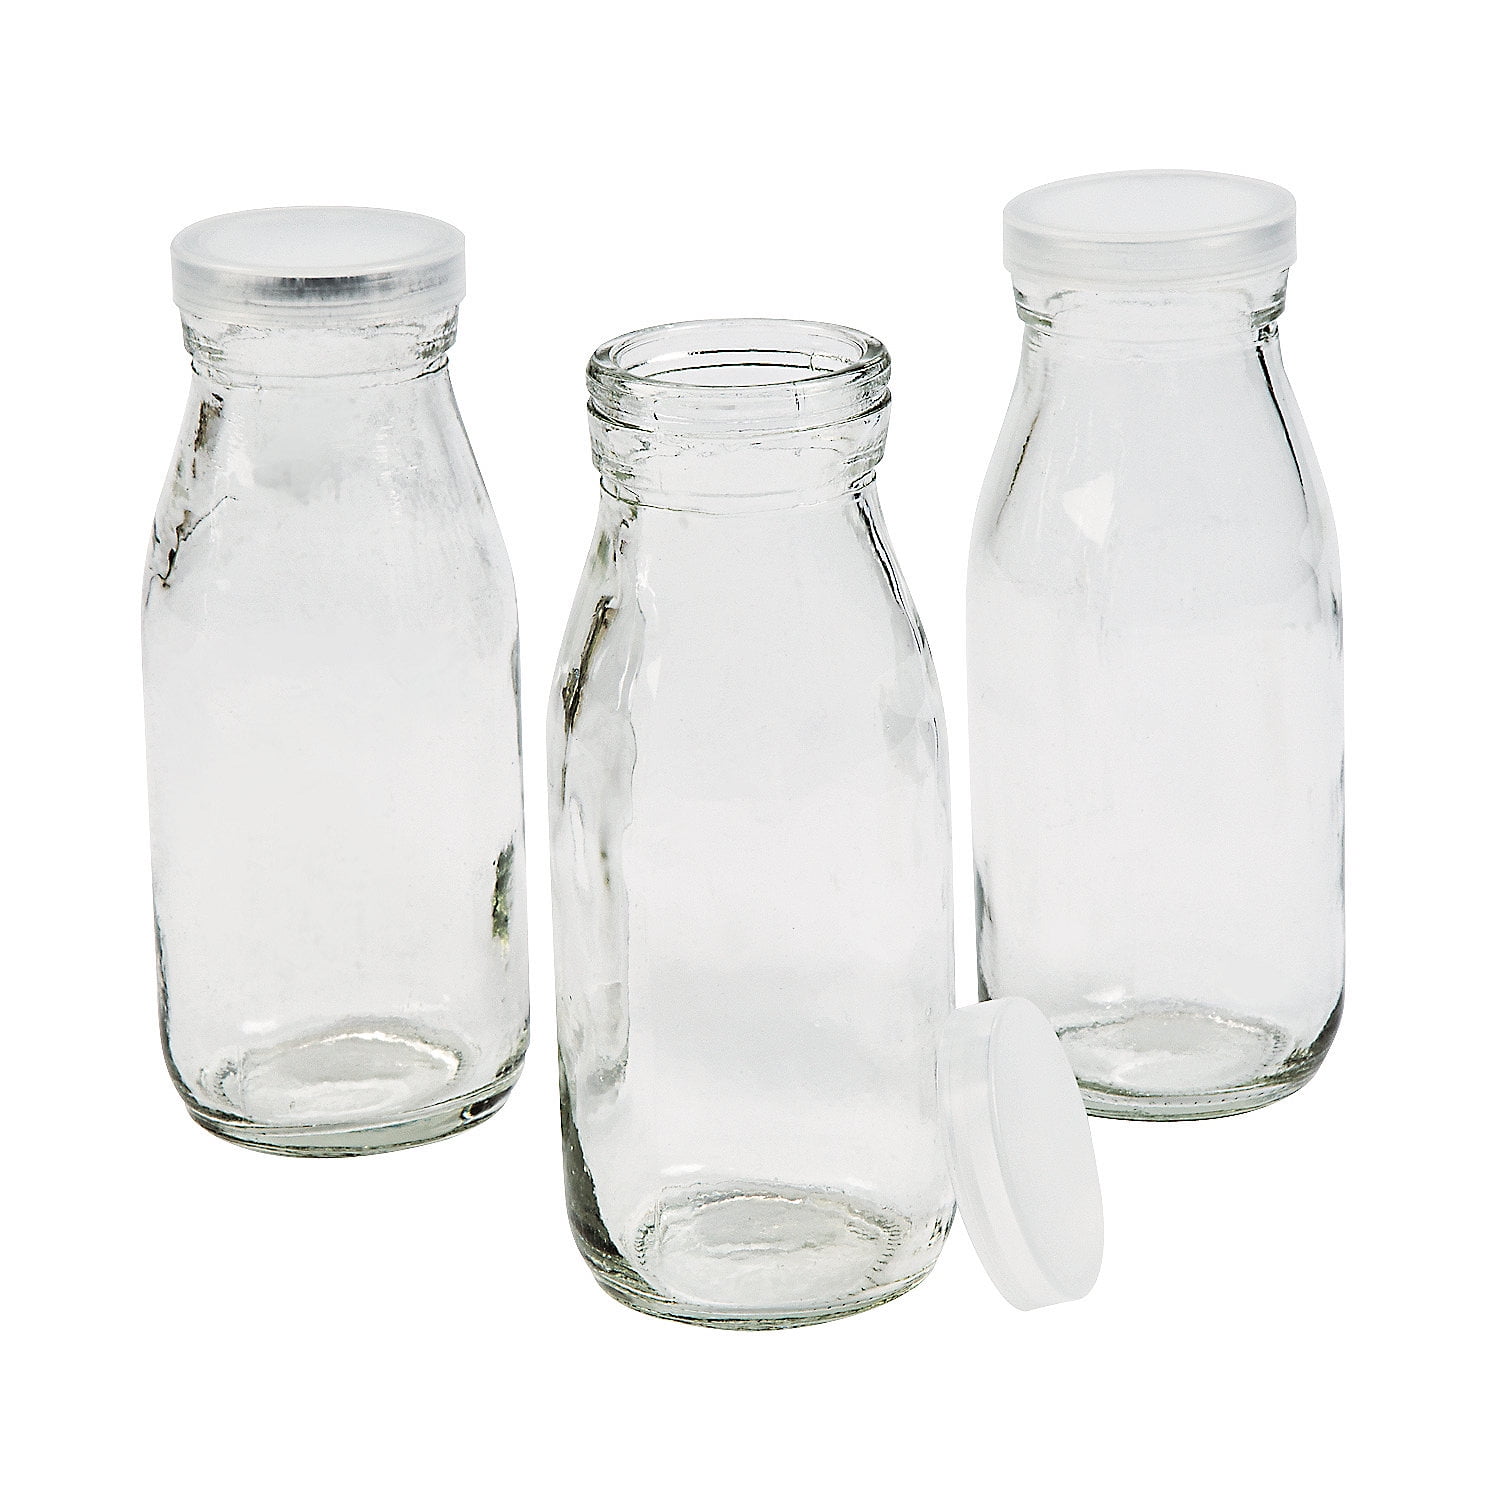  6 Pcs 16oz Glass Milk Bottles with Lids Small Milk